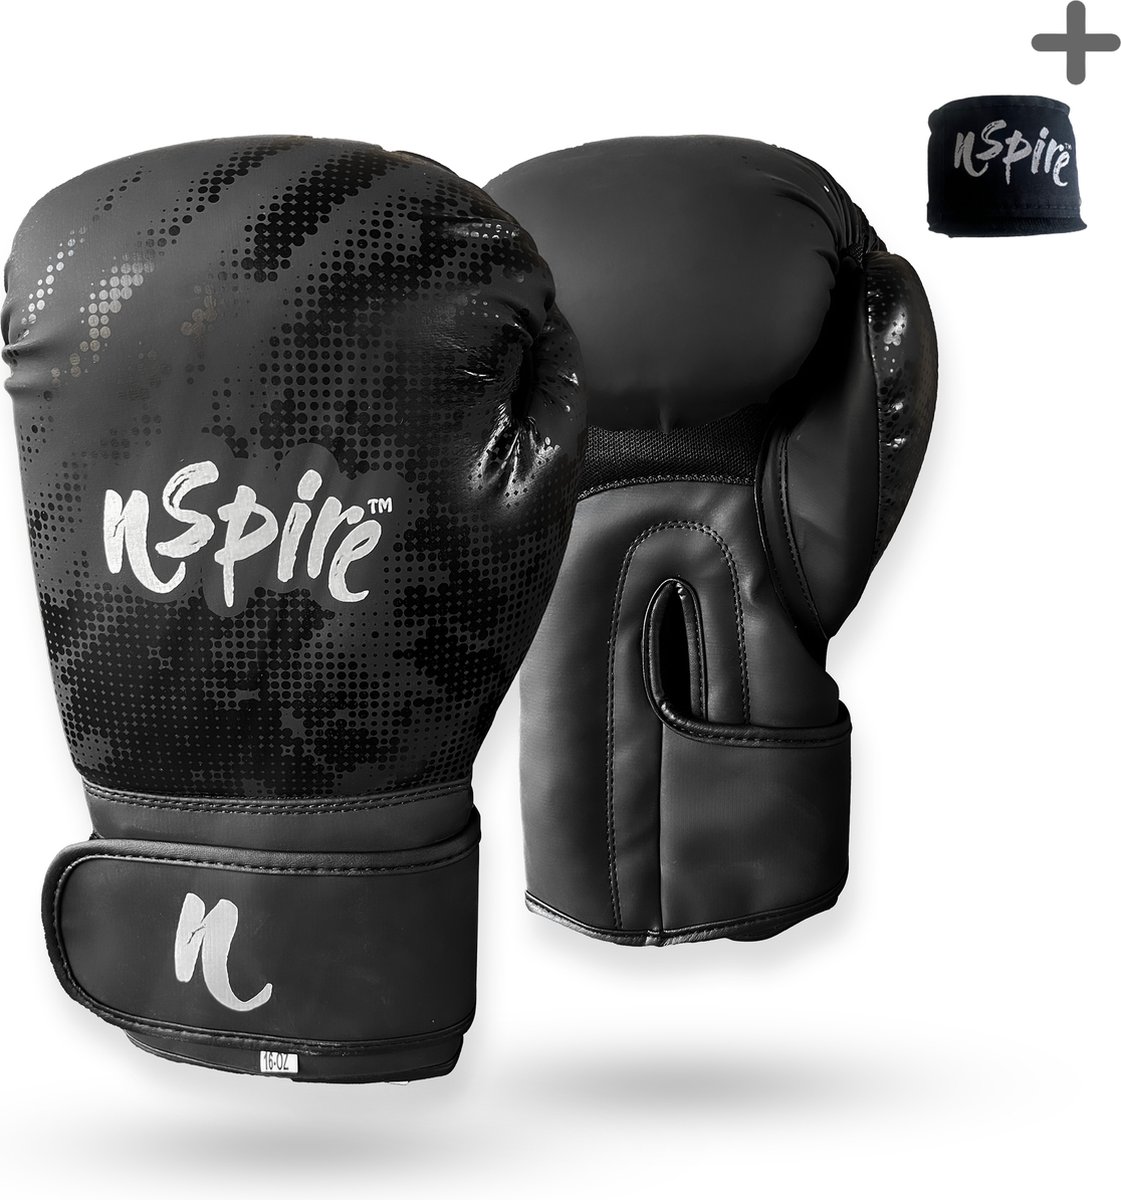 Nspire Sports : (kick) bokshandschoen - plus gratis bandage - zwart 8 oz